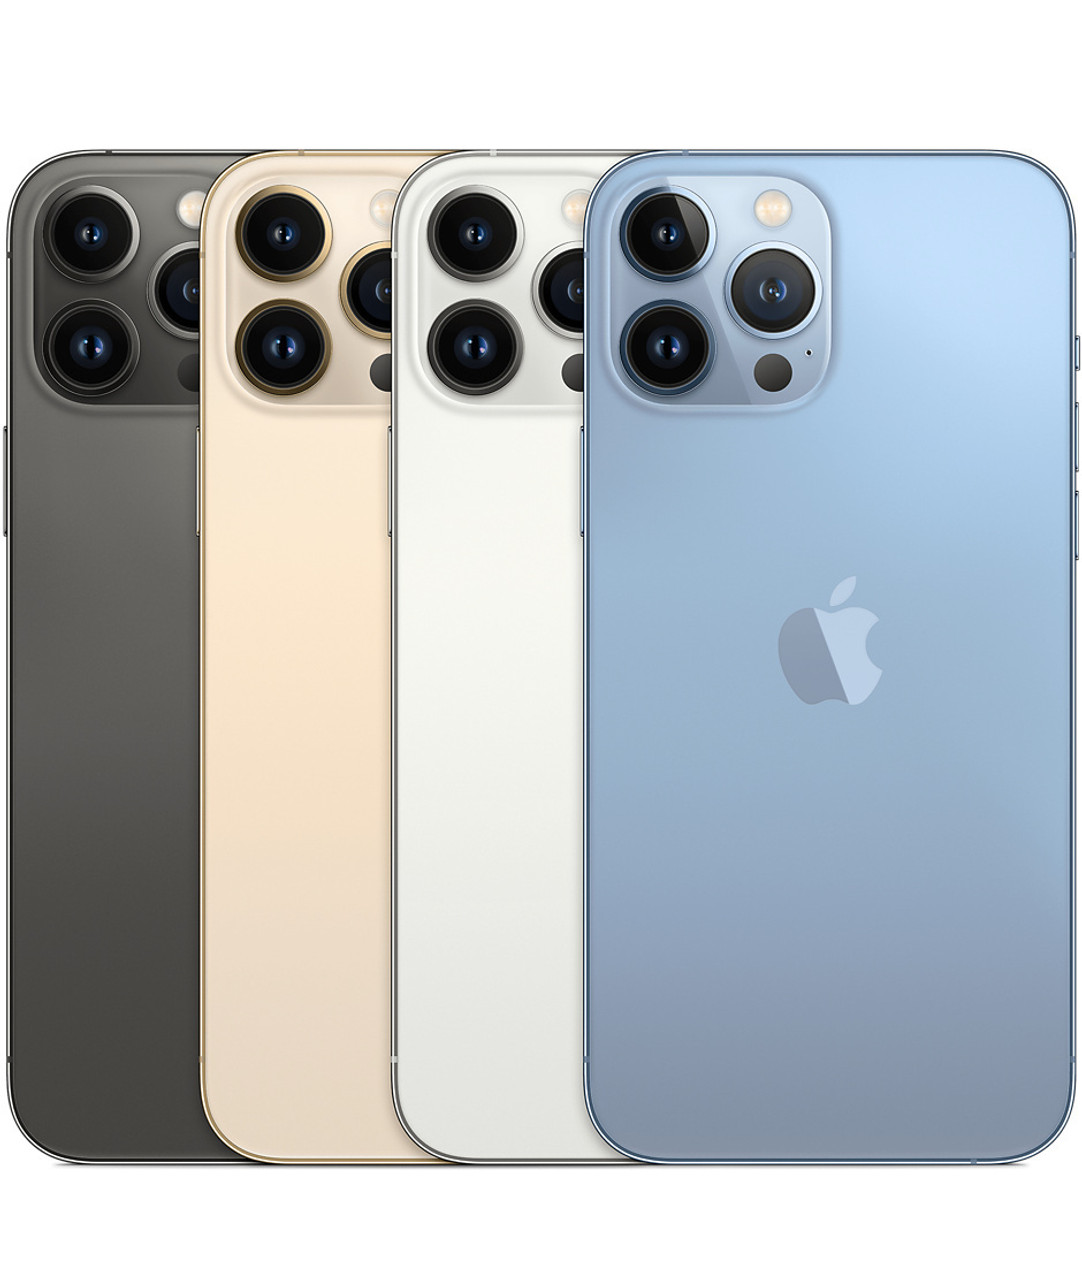 Apple iPhone 13 Pro Max (128GB) Unlocked/AT&T/Verizon/T-Mobile